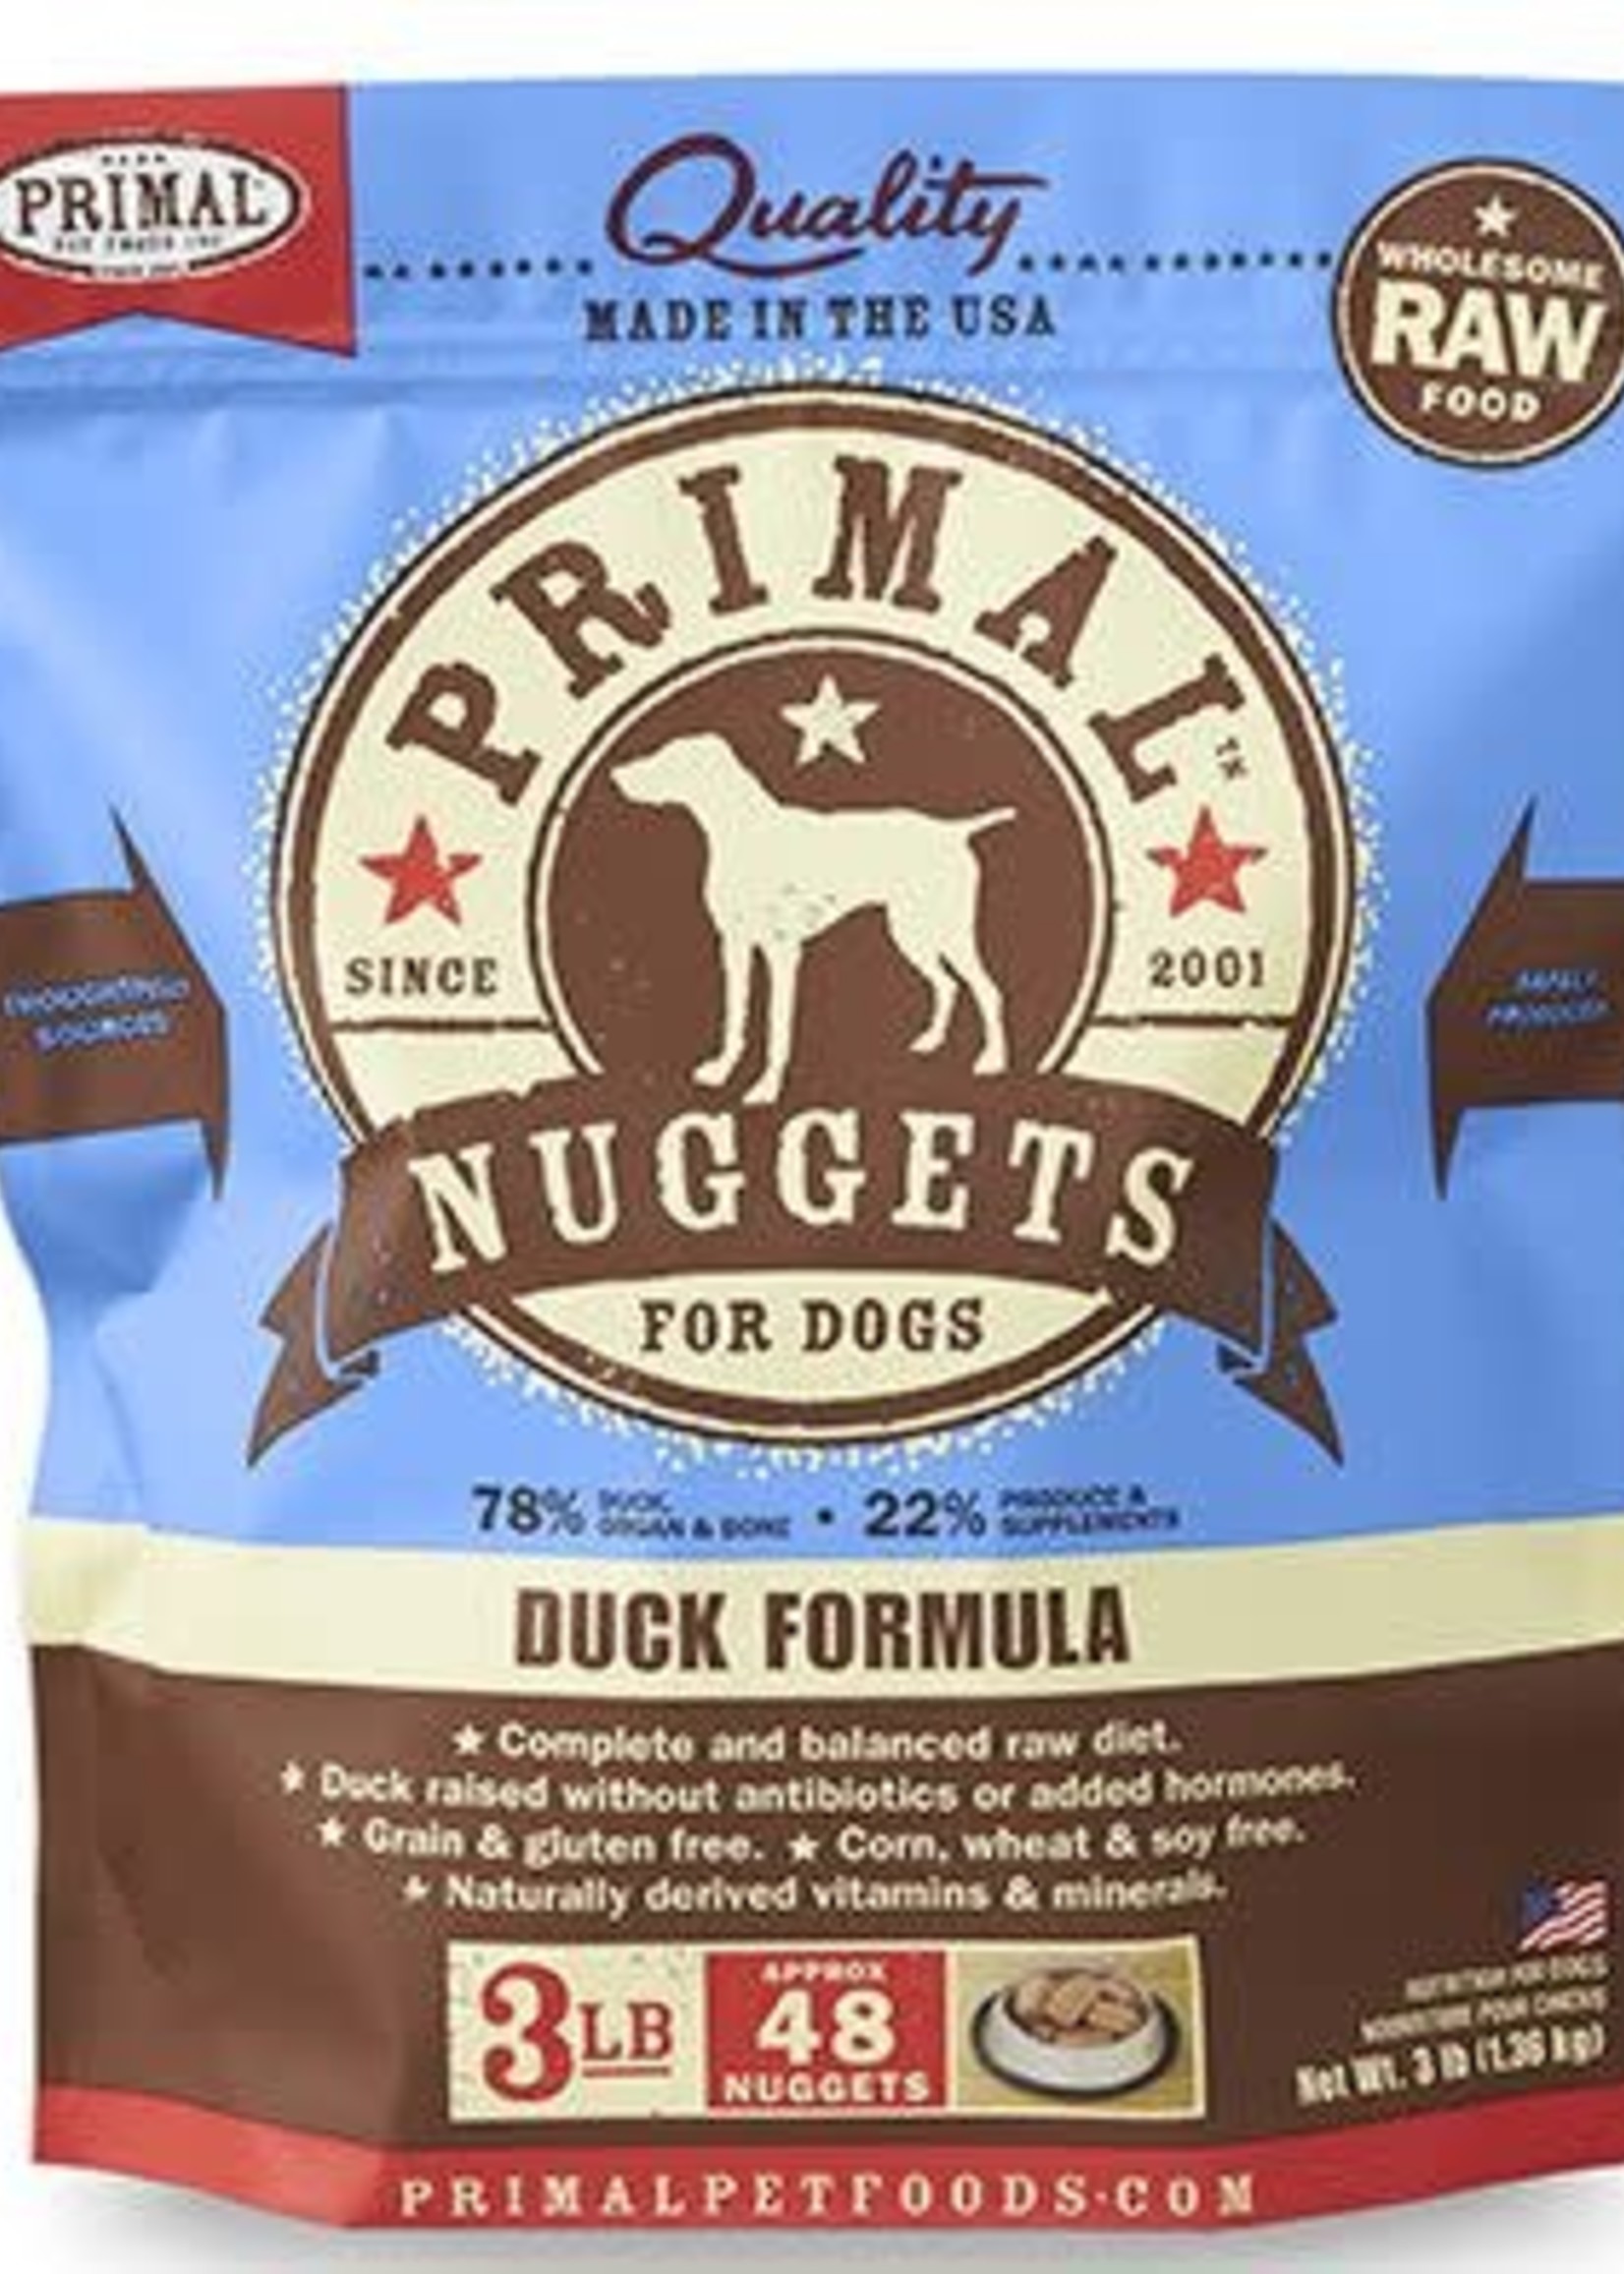 Primal Pet Foods Inc.™ Primal Raw Frozen Nuggets Duck Formula 3lbs